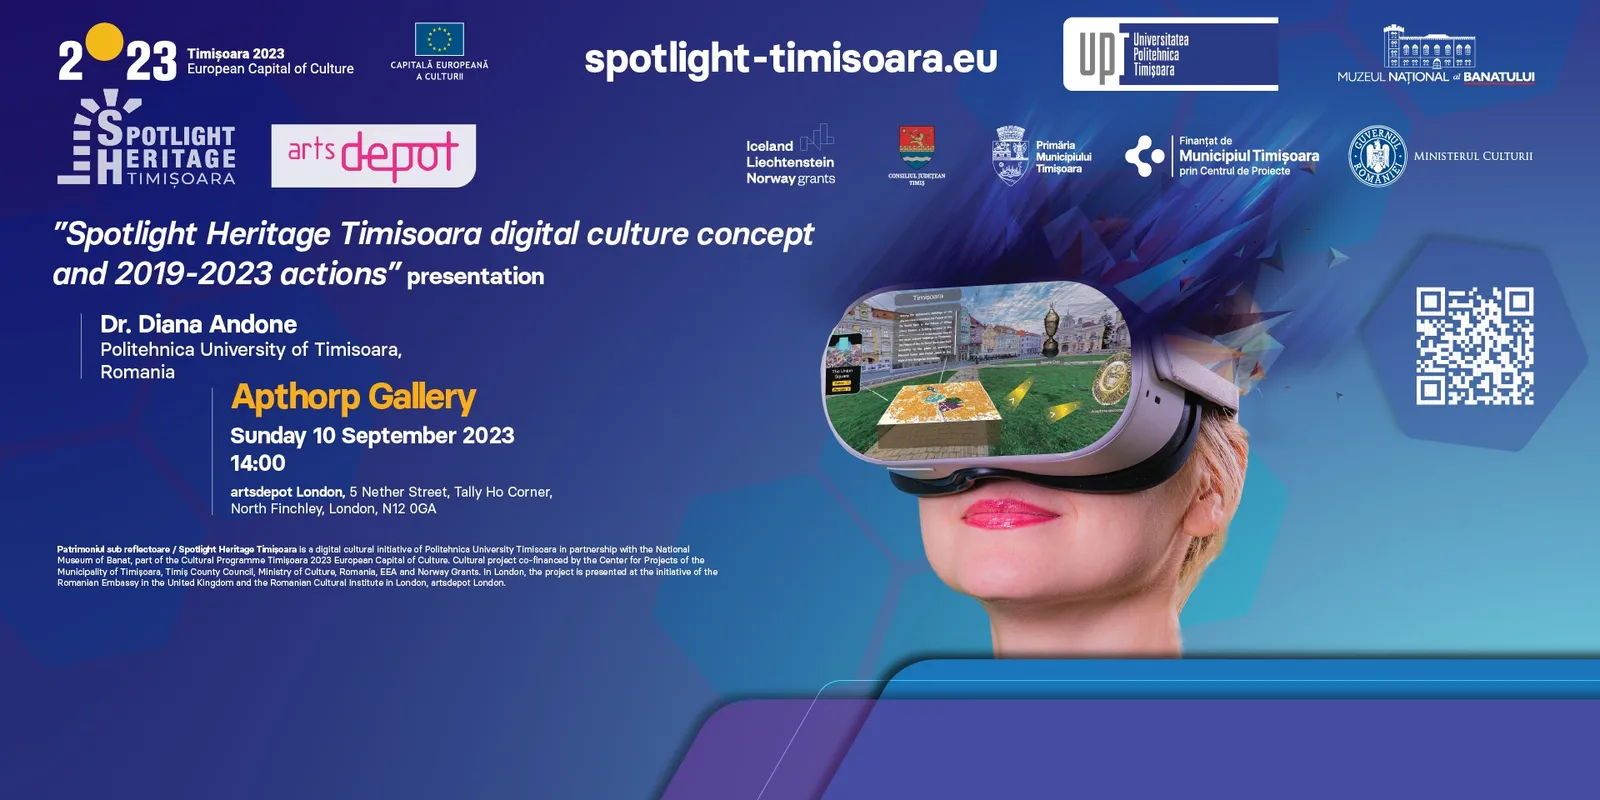 „Spotlight Heritage Timisoara digital culture concept and 2019-2023 actions” - artsdepot London